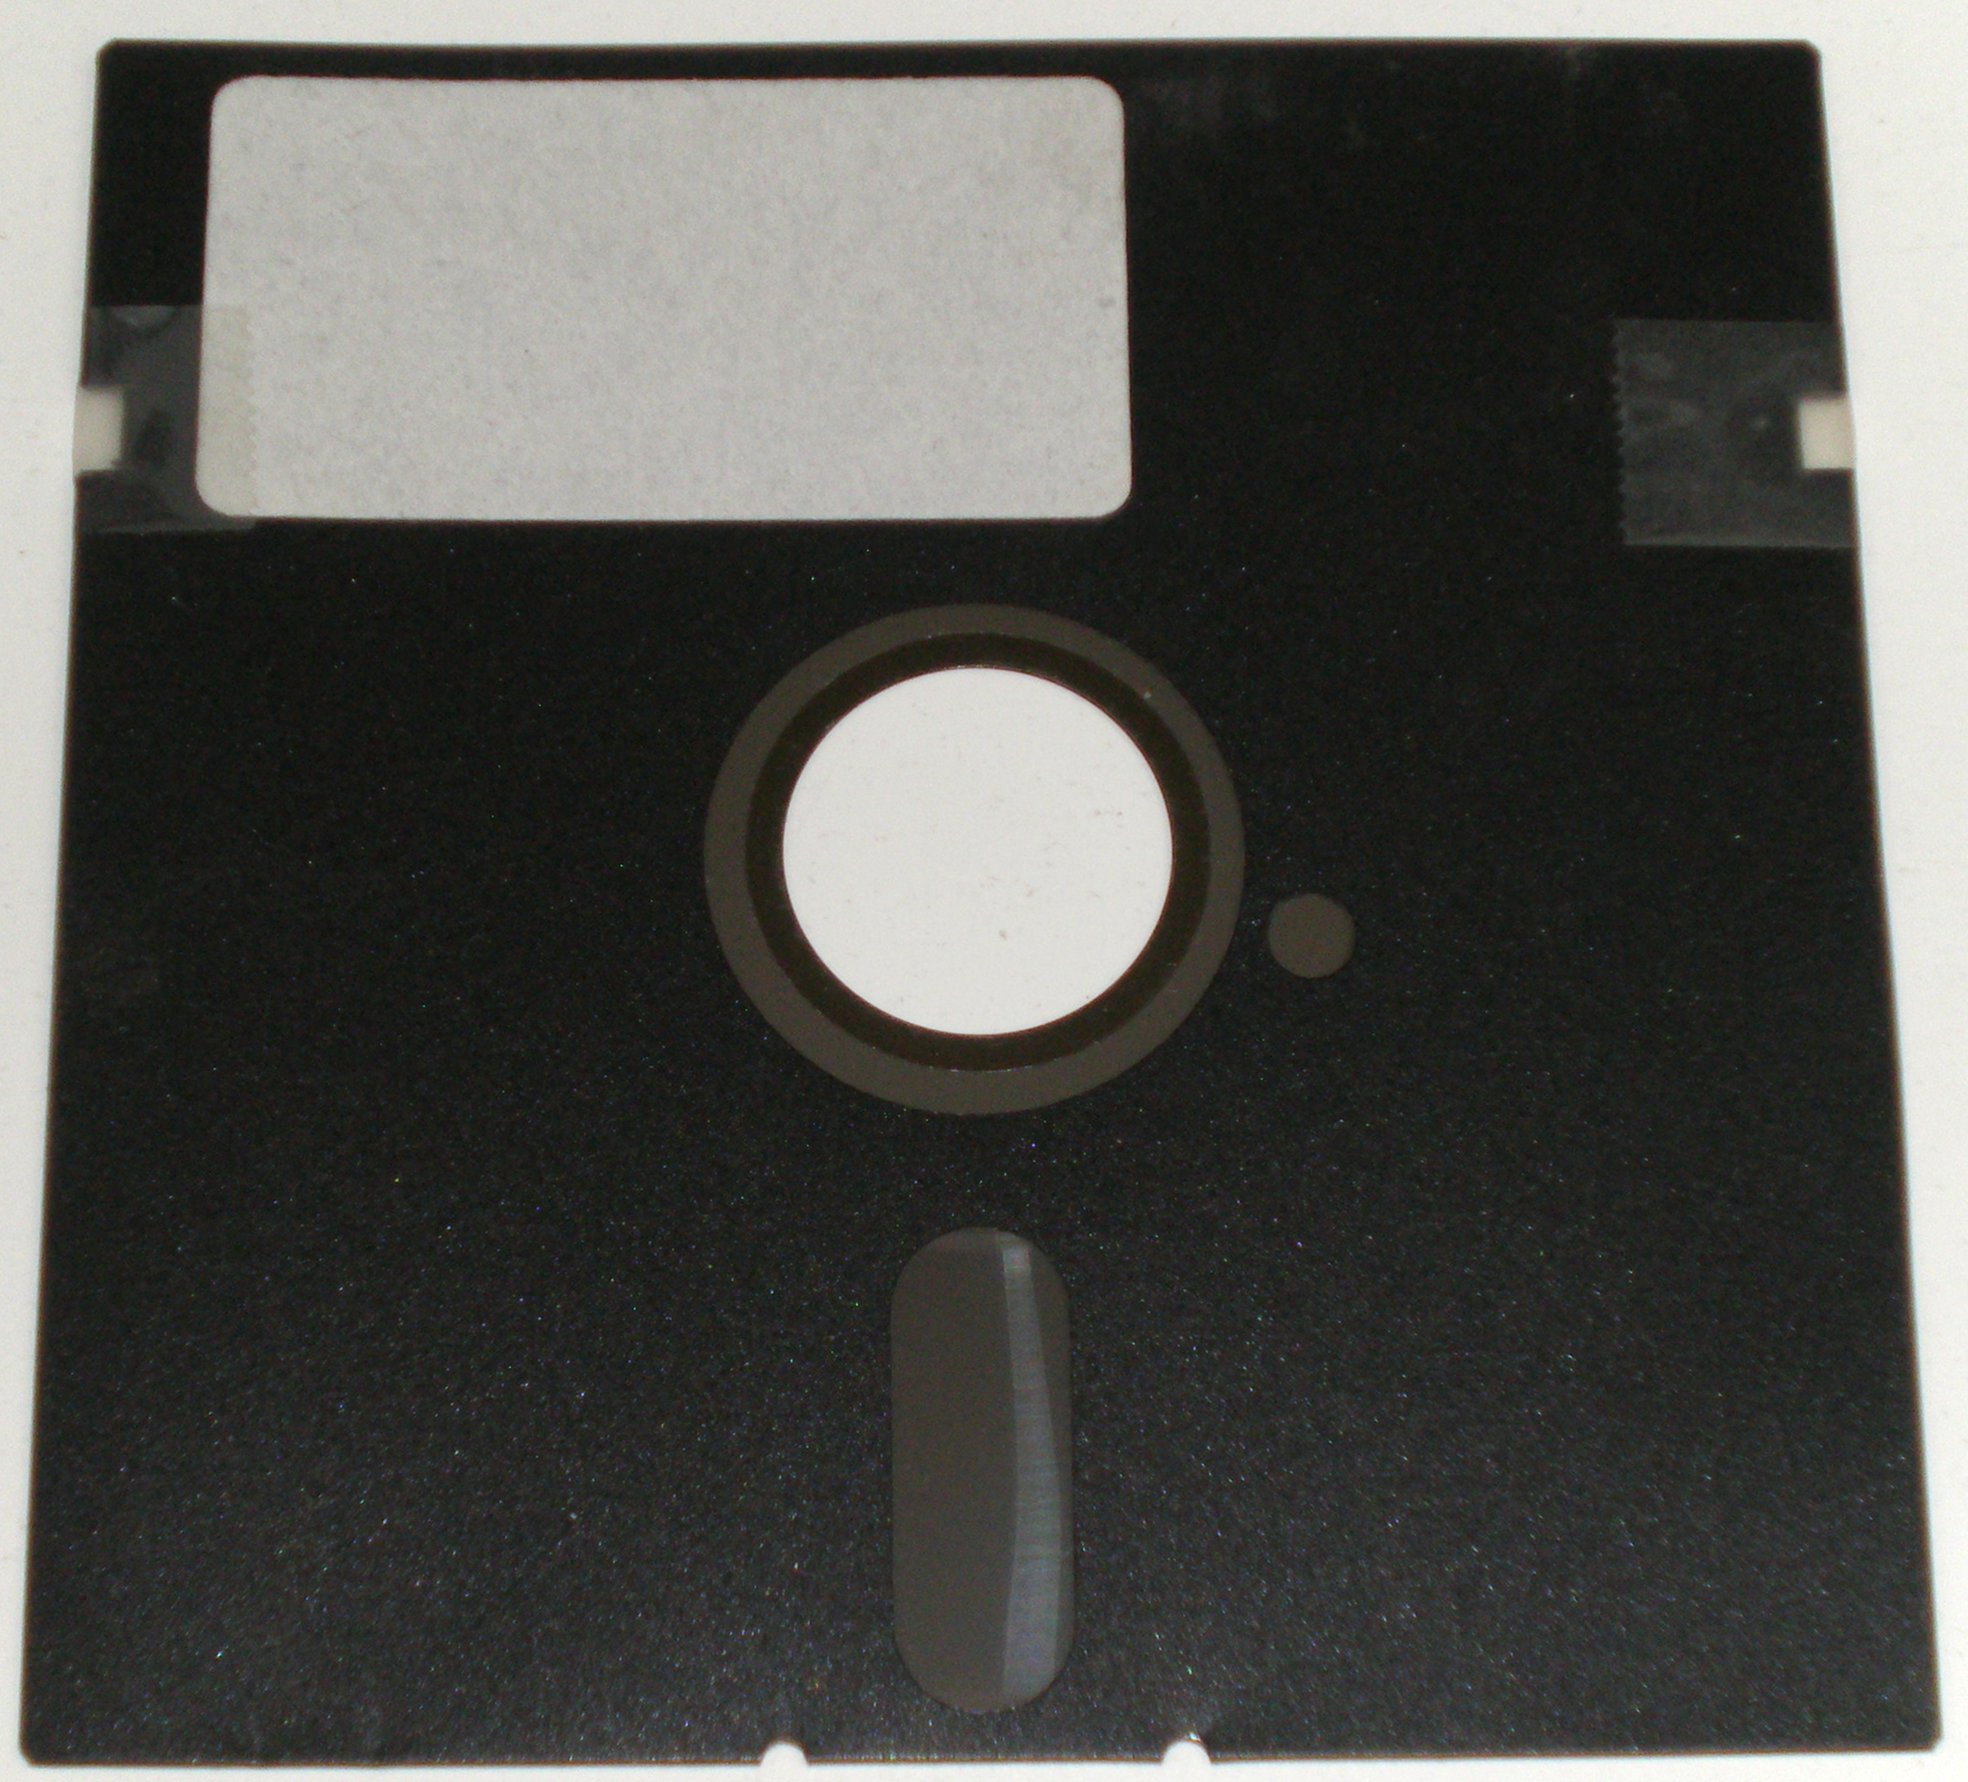 5_inch_1_4_floppy_disk_-_top_view.jpg